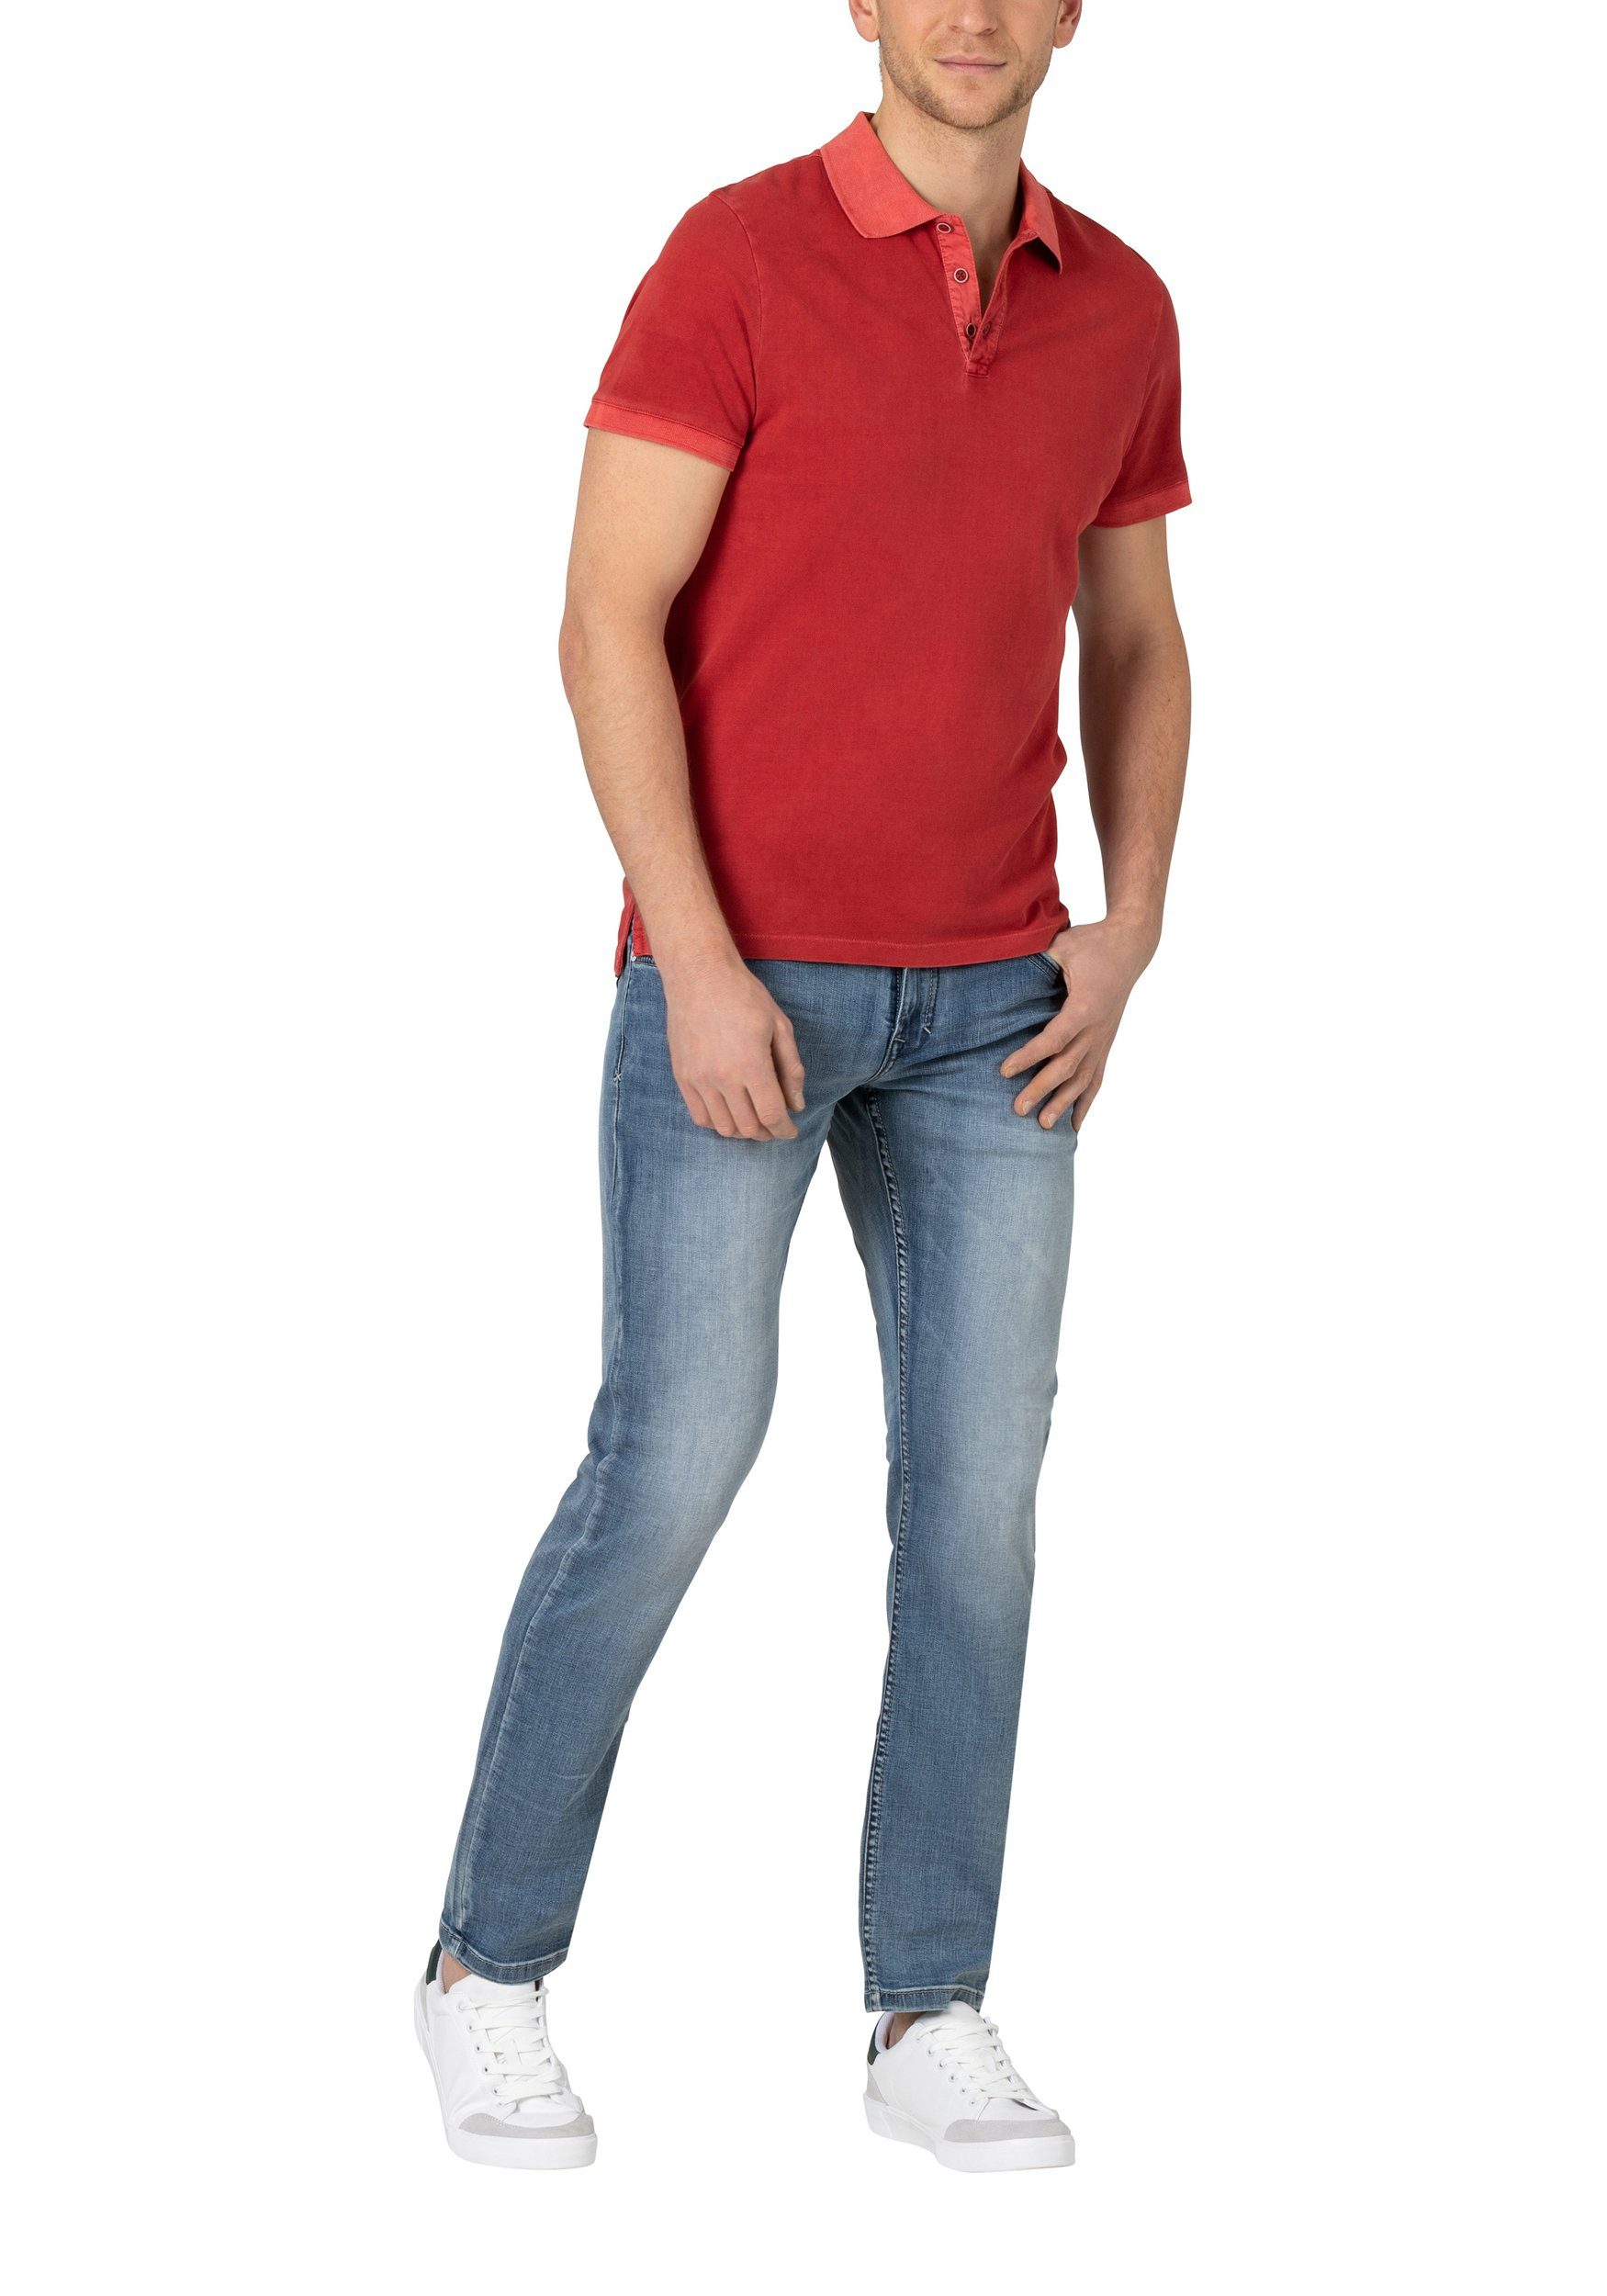 Regular Regular-fit-Jeans 6596 Hose Blau-2 5-Pocket Reißverschluss Denim Jeans TIMEZONE Pants in